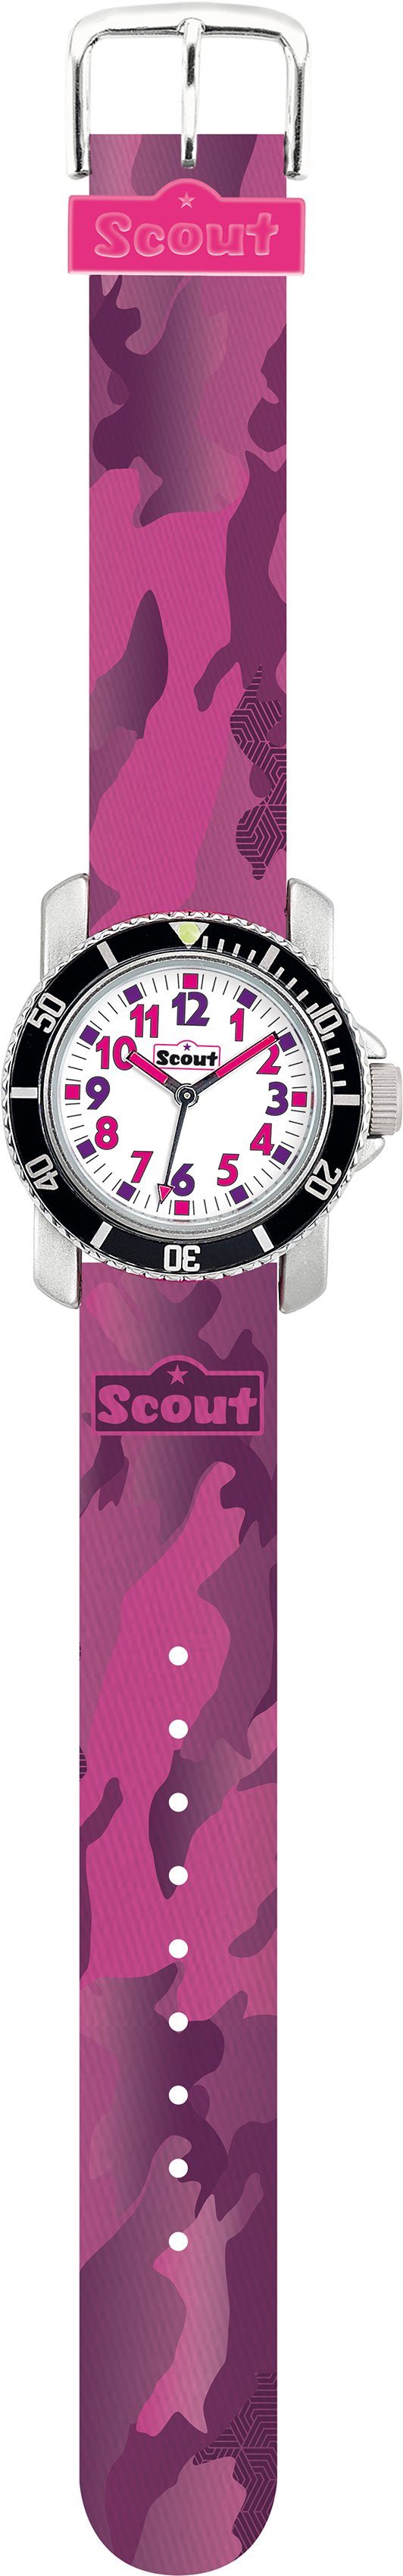 Scout Diver, Geschenk 280377004, auch Quarzuhr ideal als